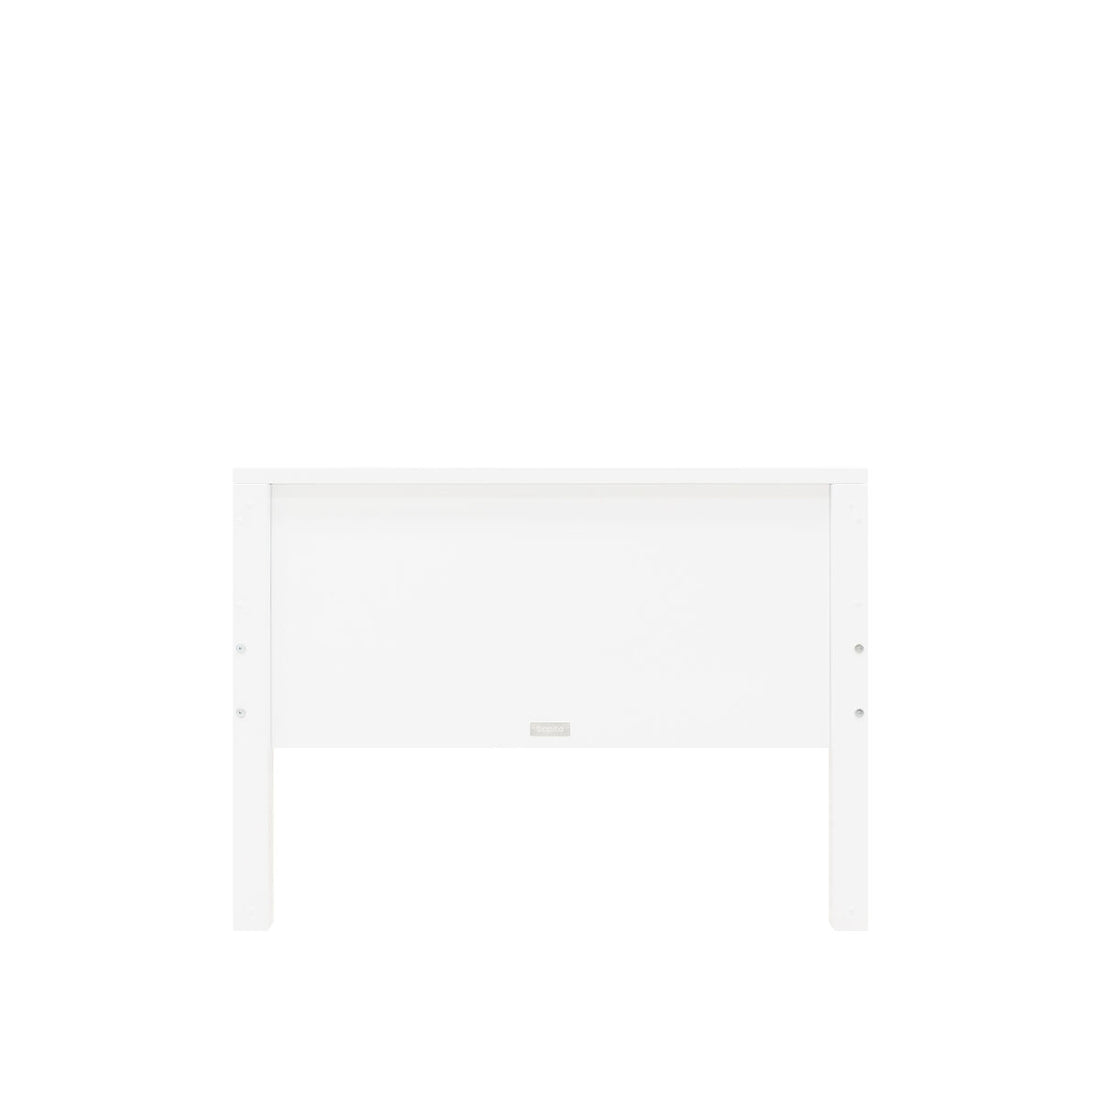 bopita-bed-90x200-combiflex-white-incl-2-protection-sides-bopt-51014611- (4)